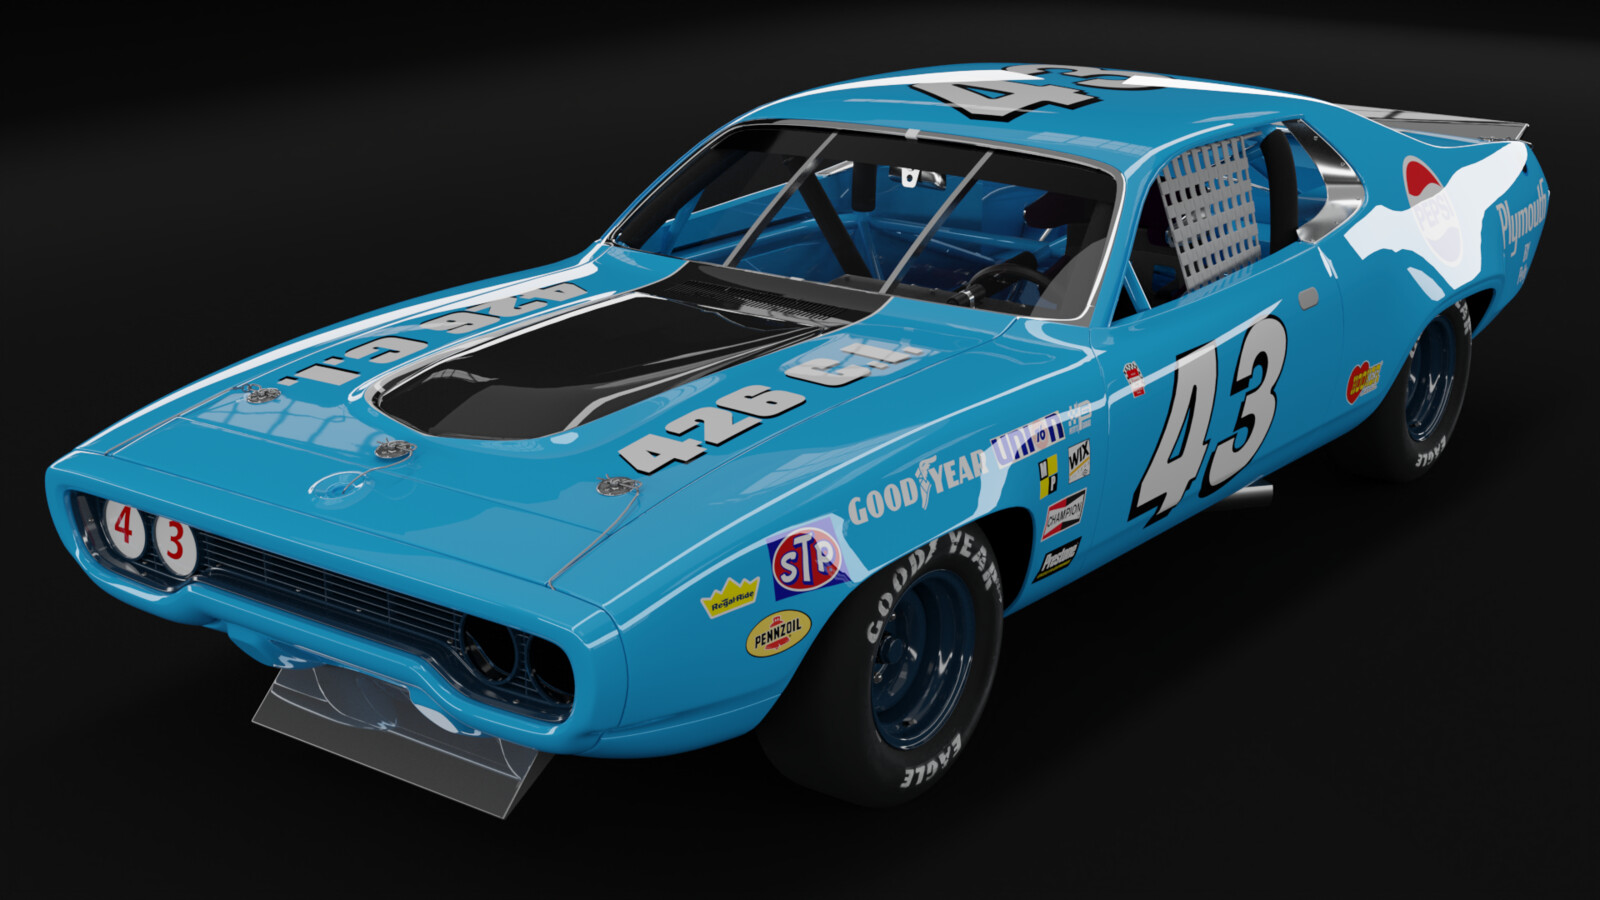 1971 Plymouth Roadrunner Richard Petty NASCAR #43